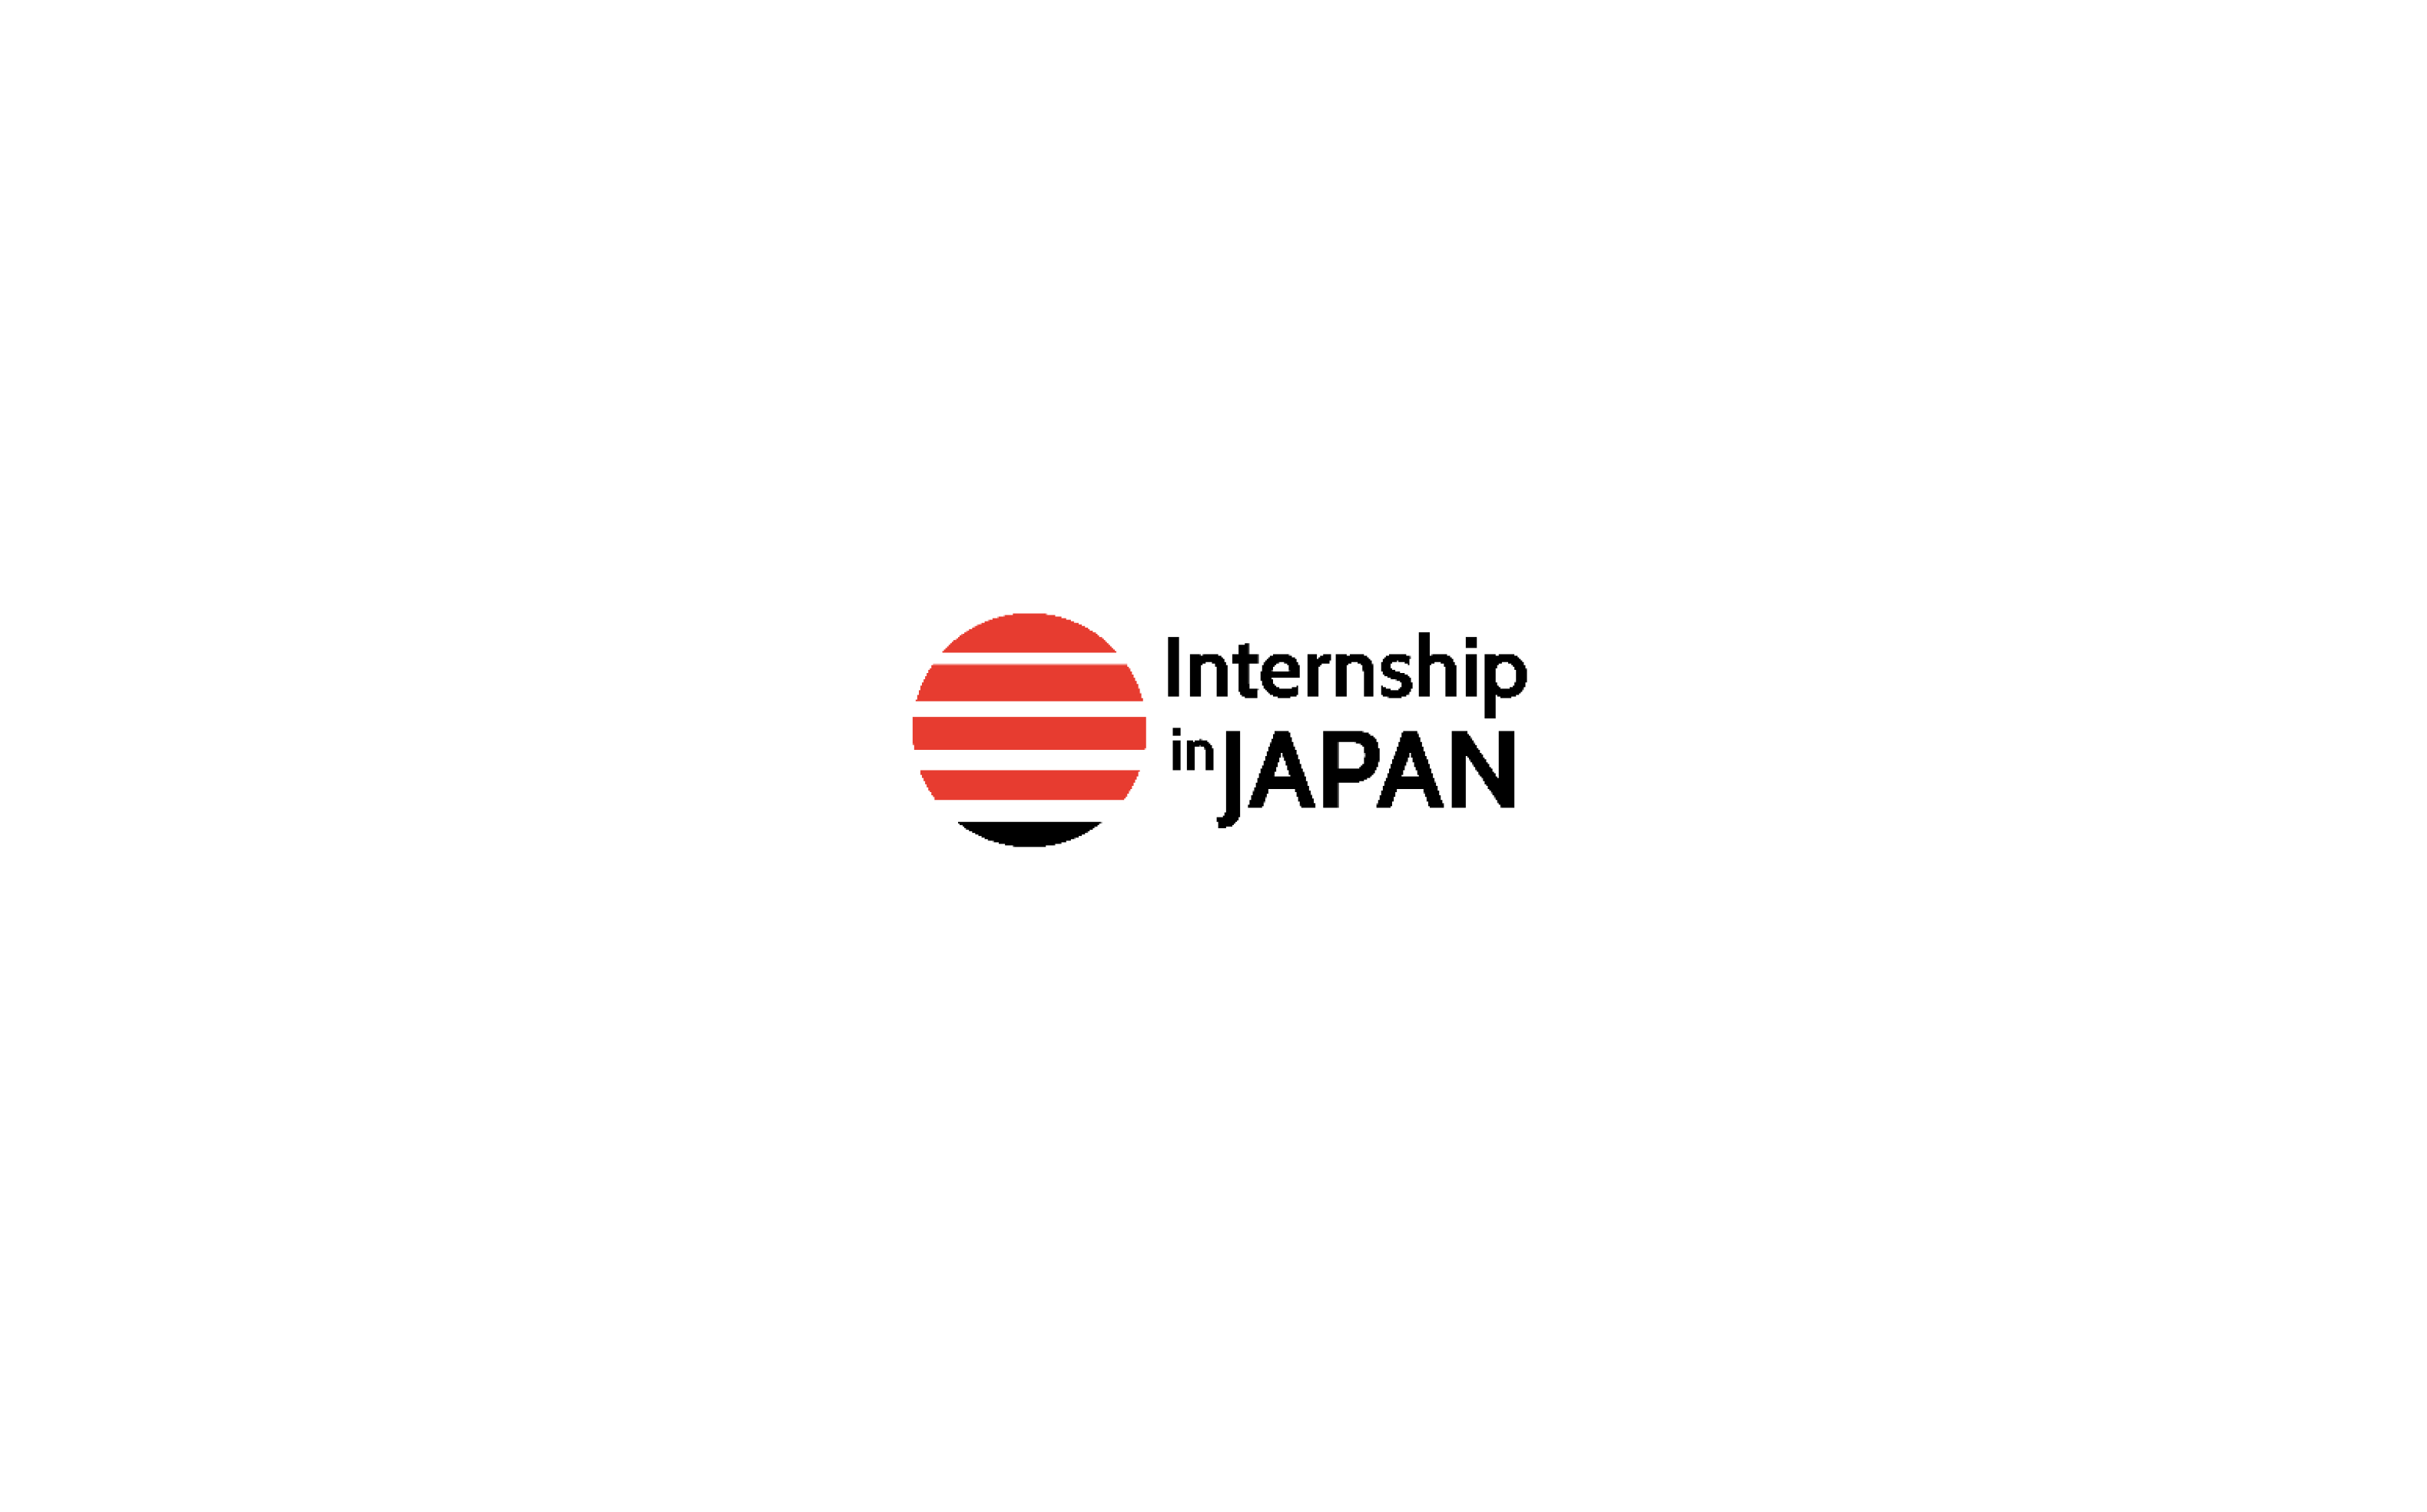 Internship Summer in Japan has started!